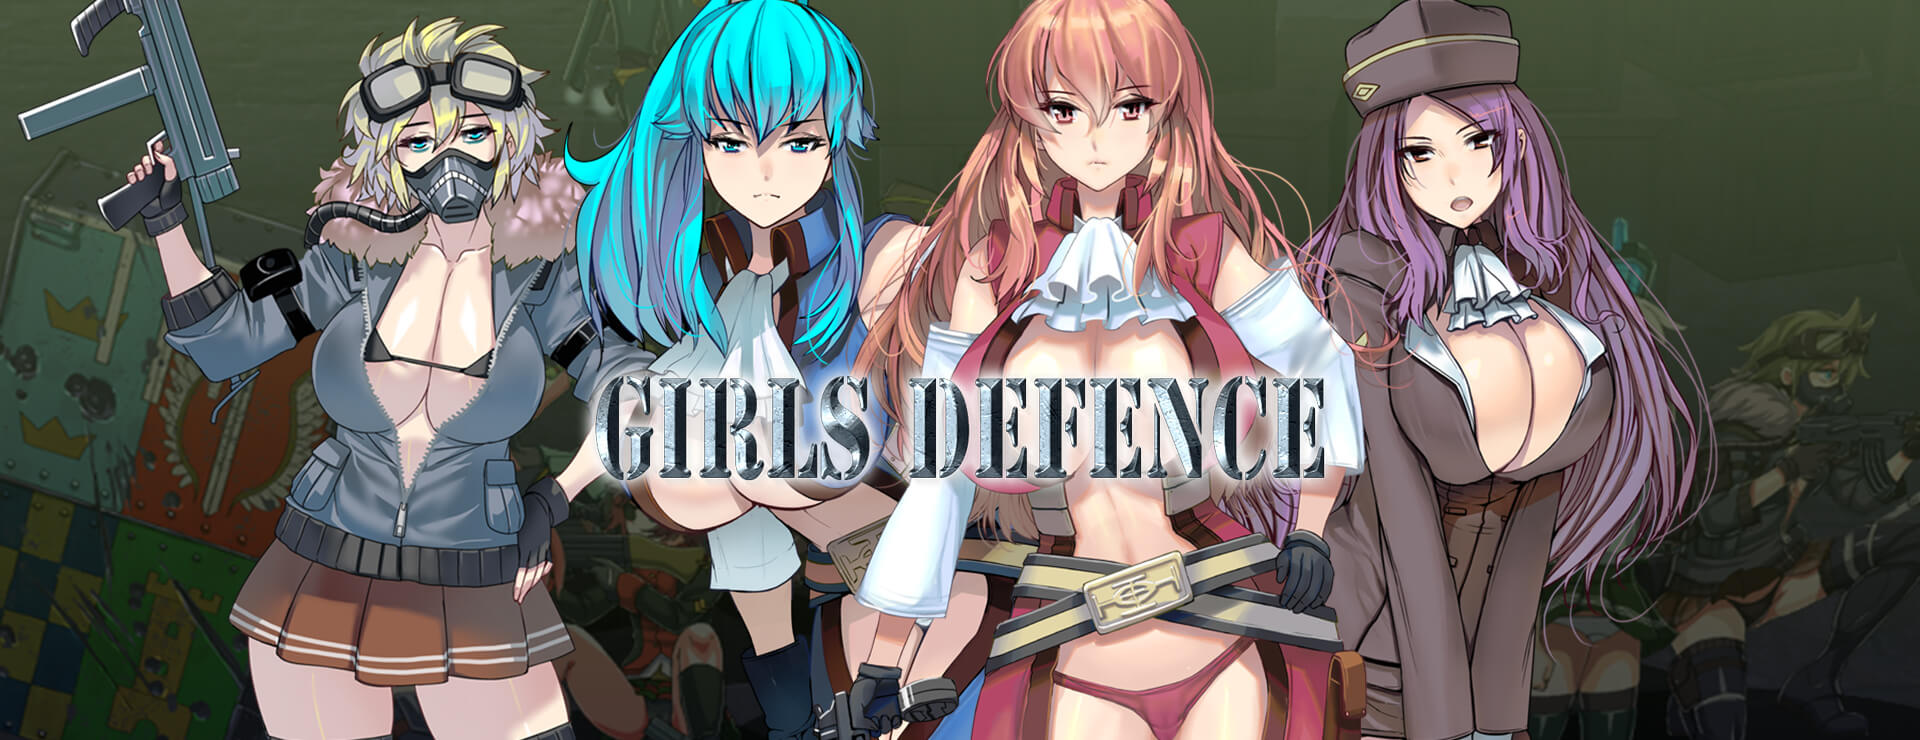 Girls Defence - Action Adventure Spiel